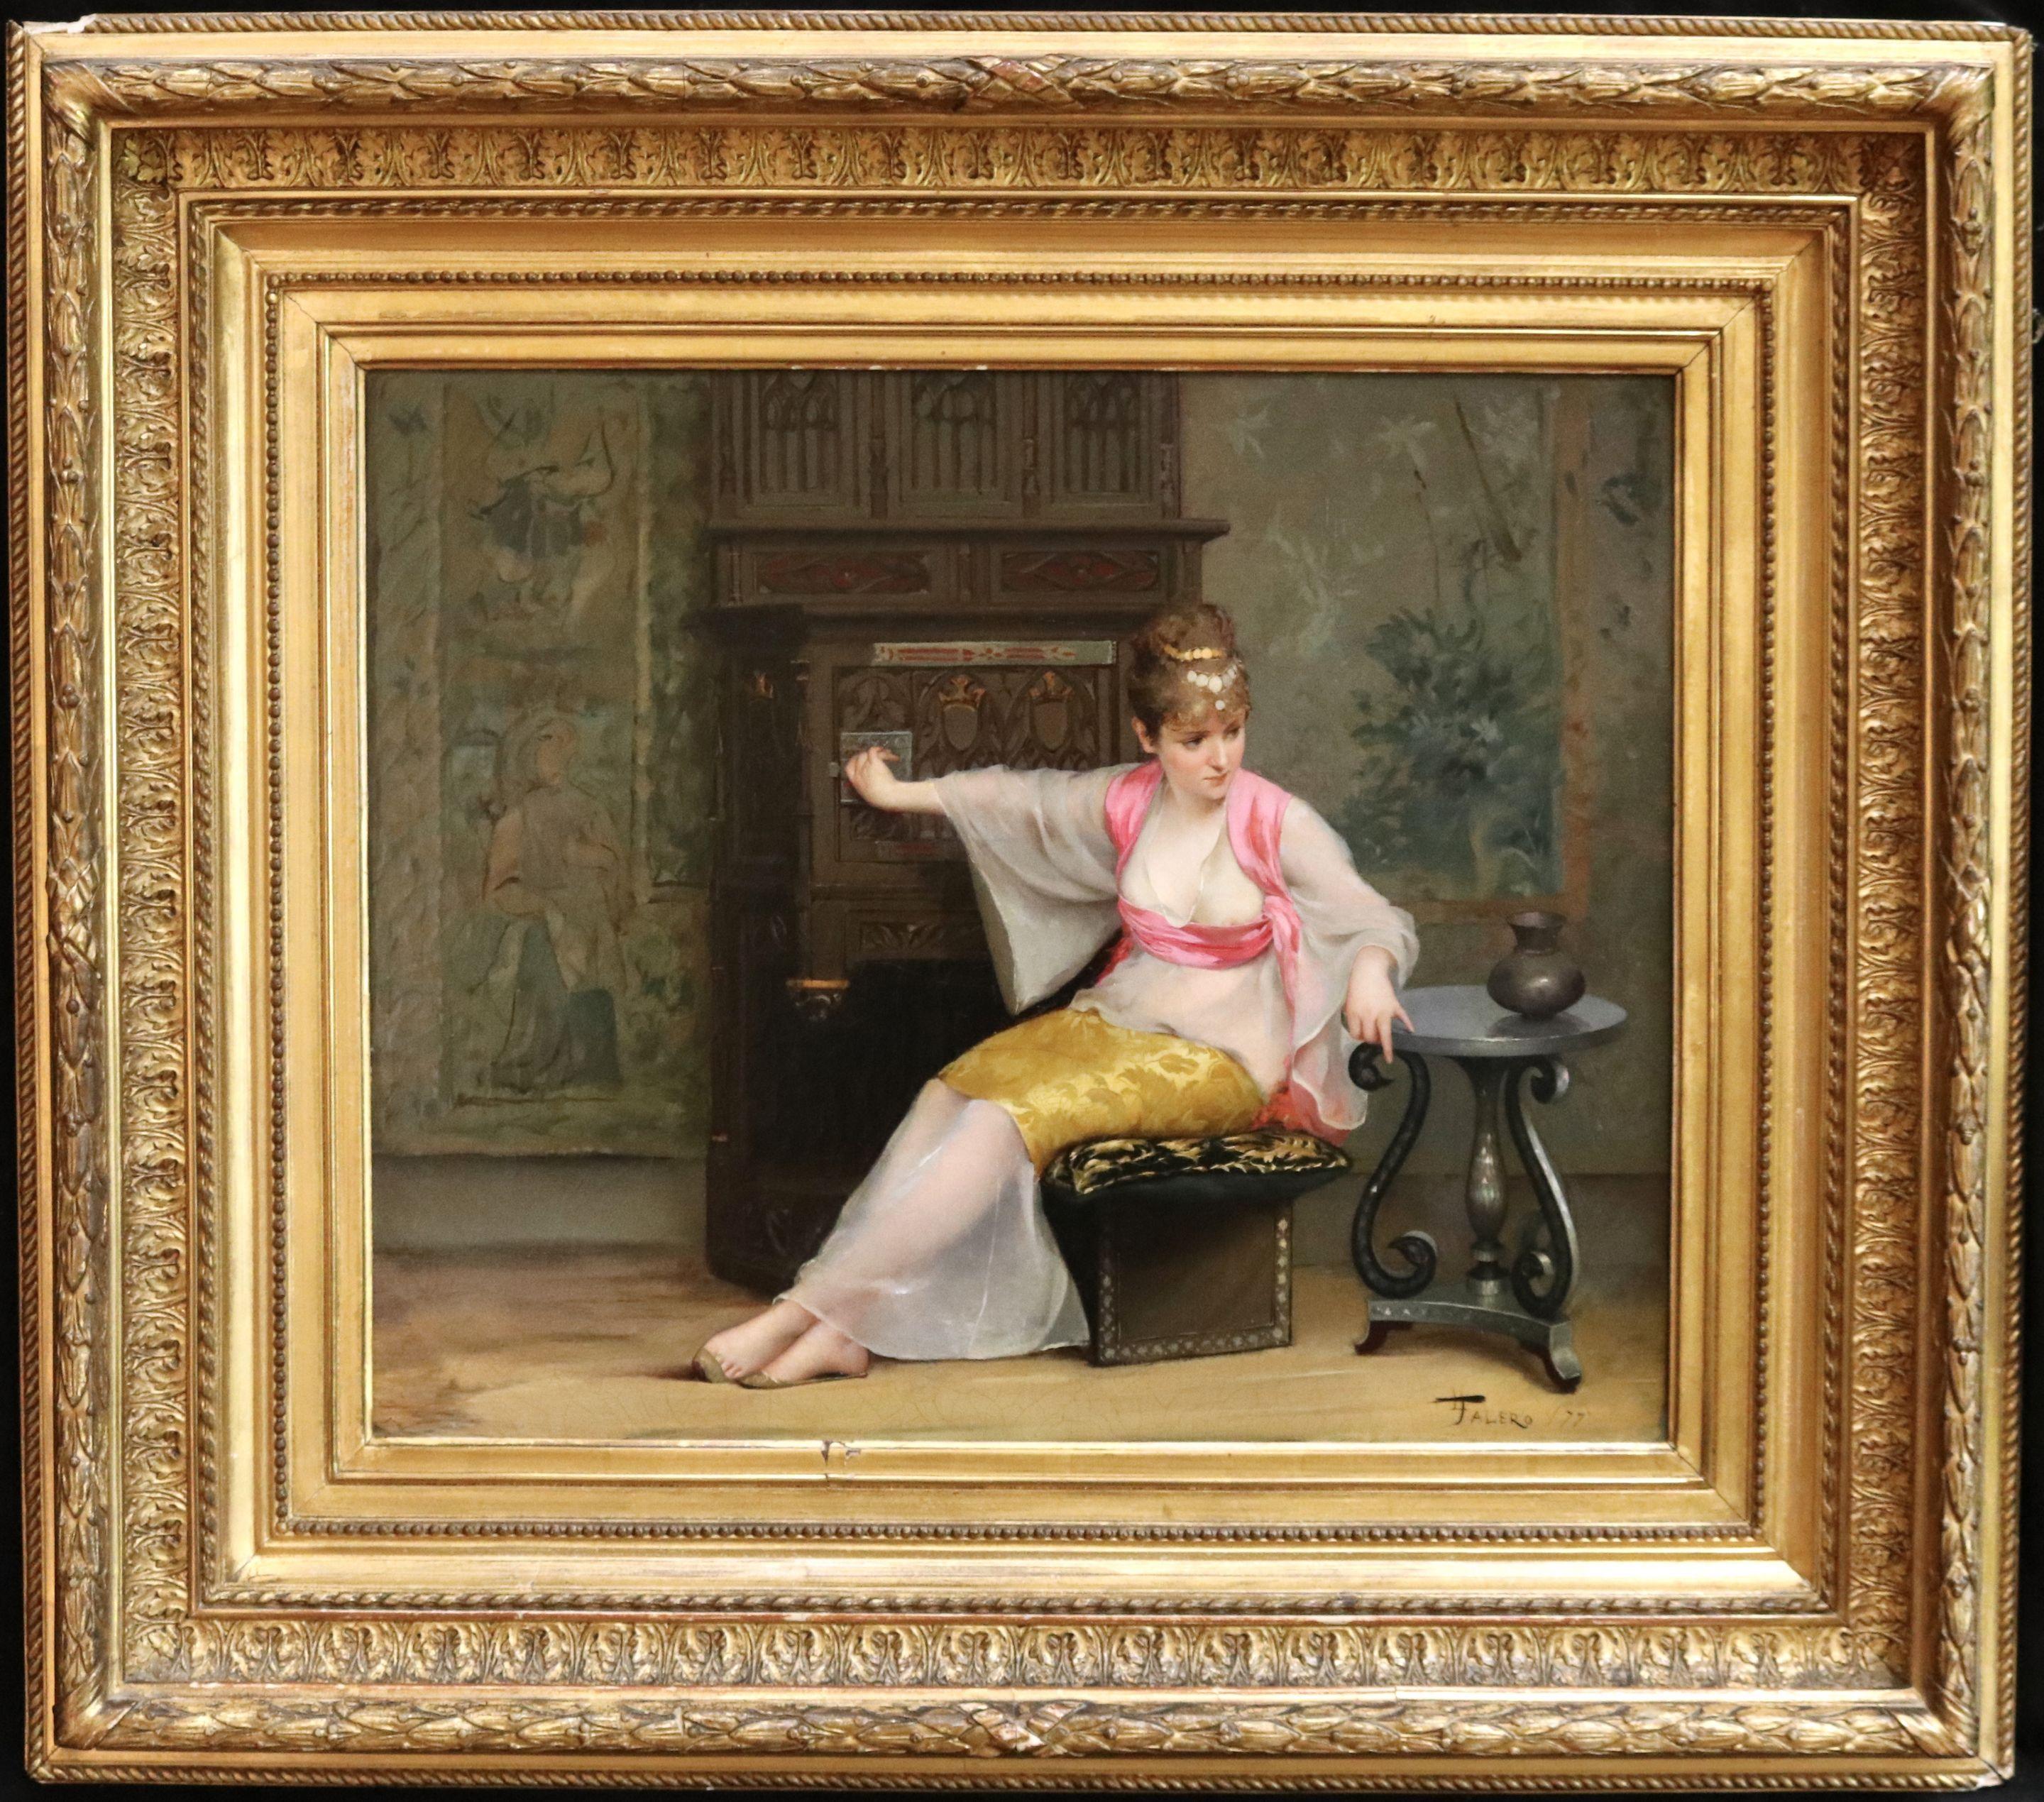 Orientalist Girl in Interior - 19th Century Oil, Elegant Woman by Luis Falero - Painting by Luis Ricardo Falero